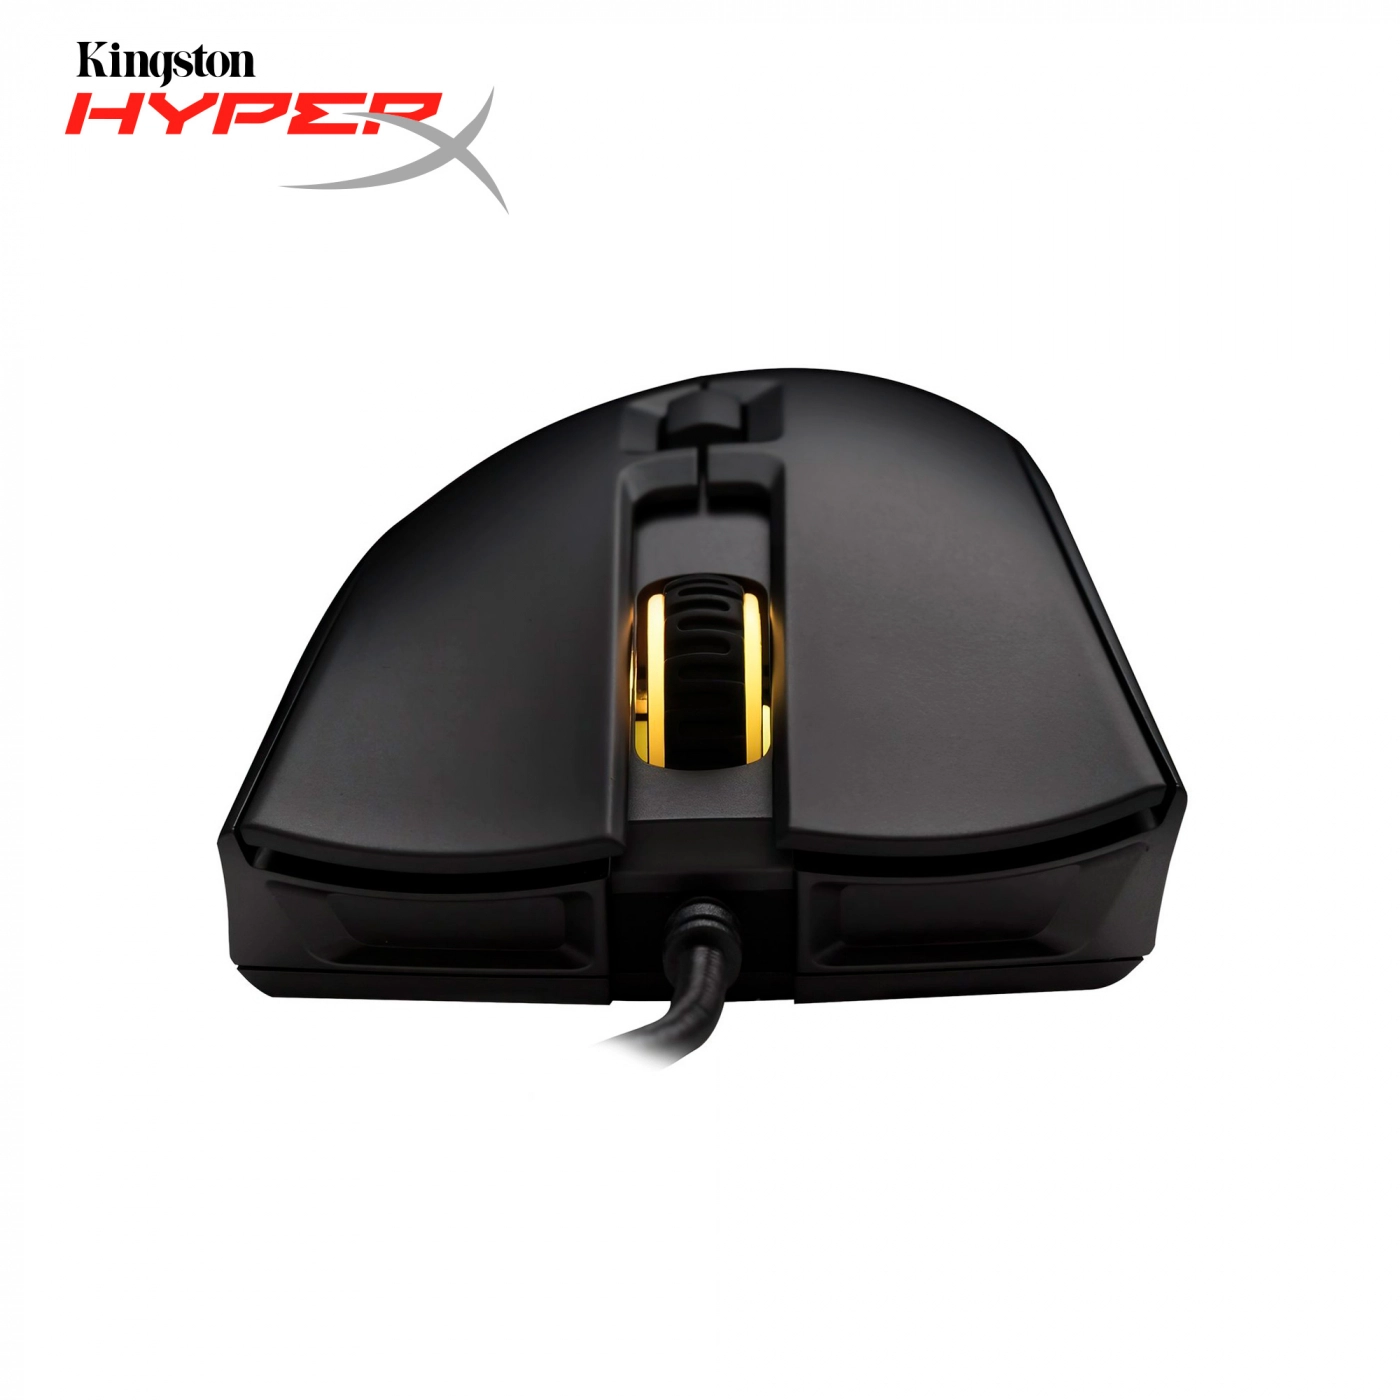 Купить Мышь Kingston HyperX Pulsefire FPS Pro USB Black - фото 4